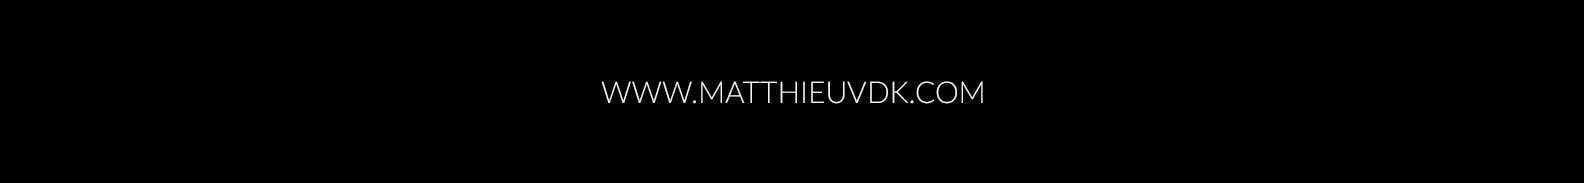 Matthieu VDK's profile banner